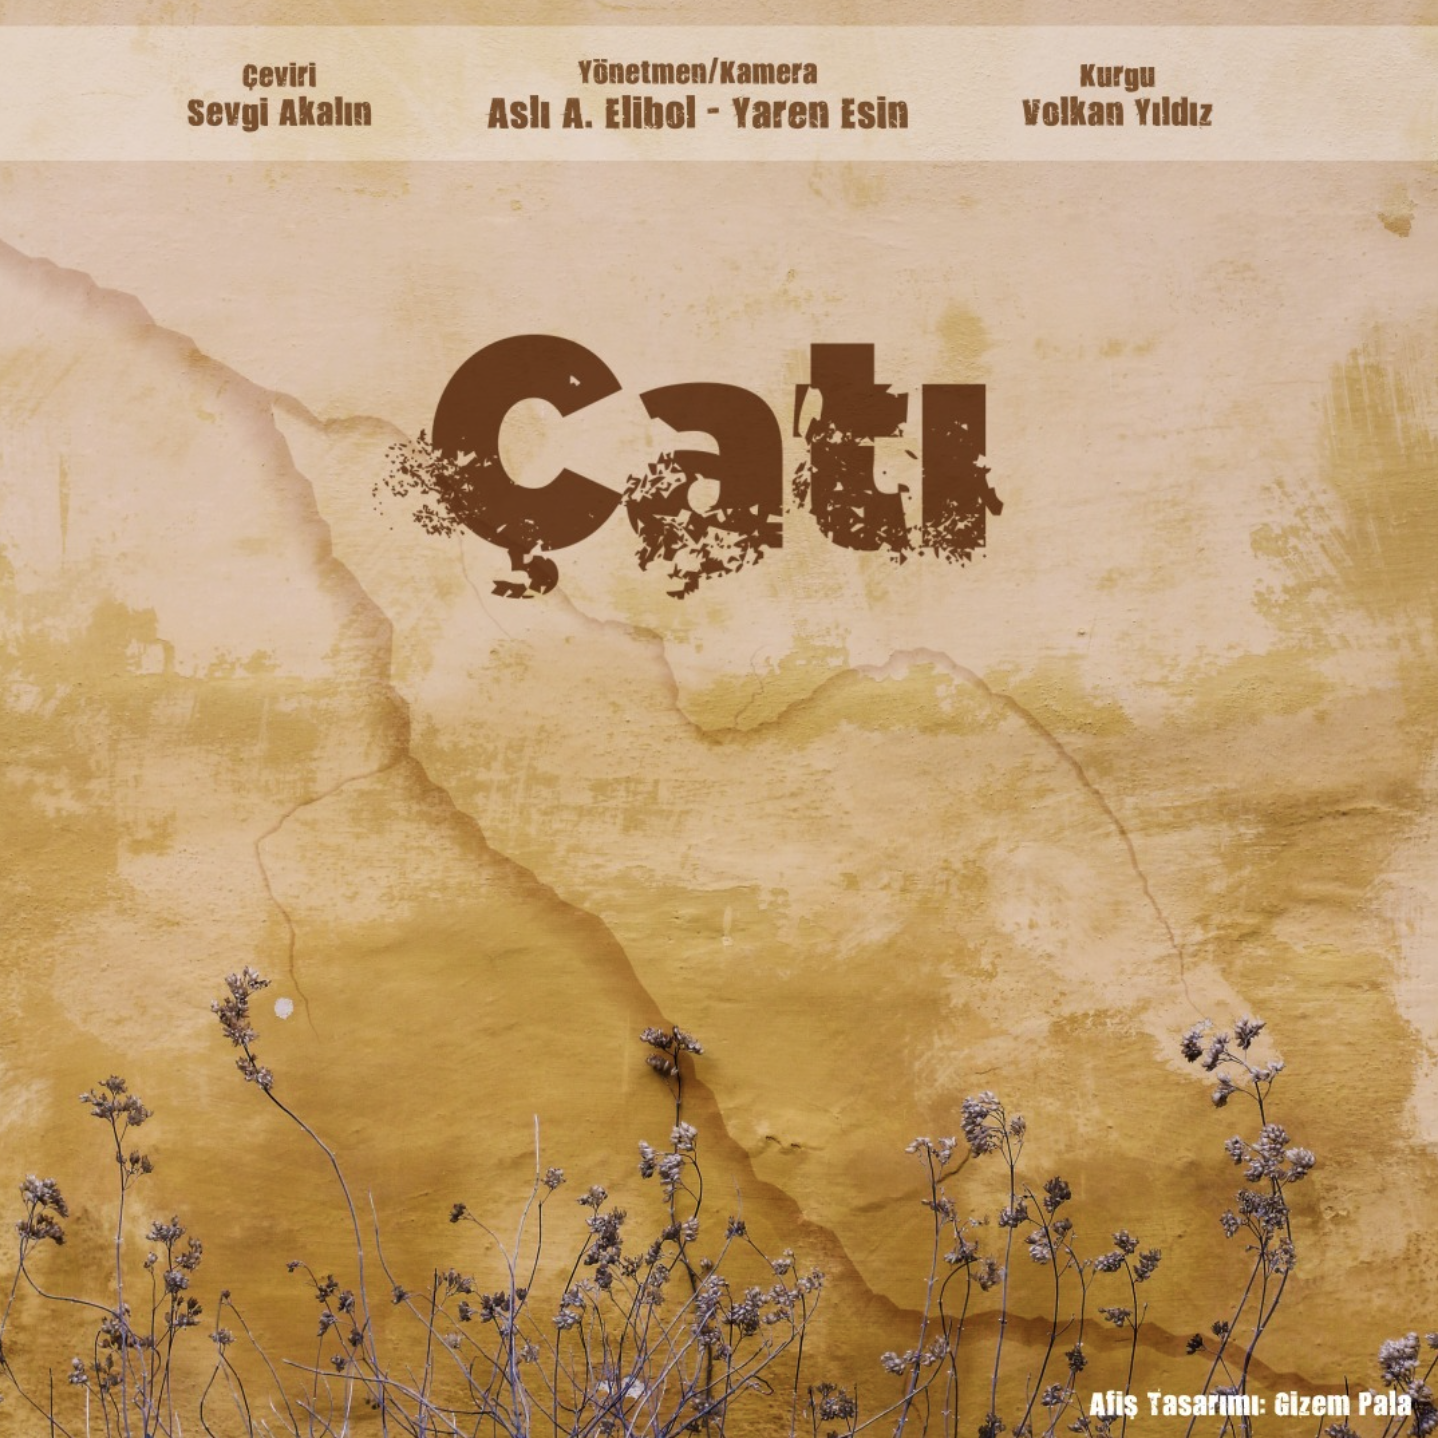 Çatı (roof) – Documentary